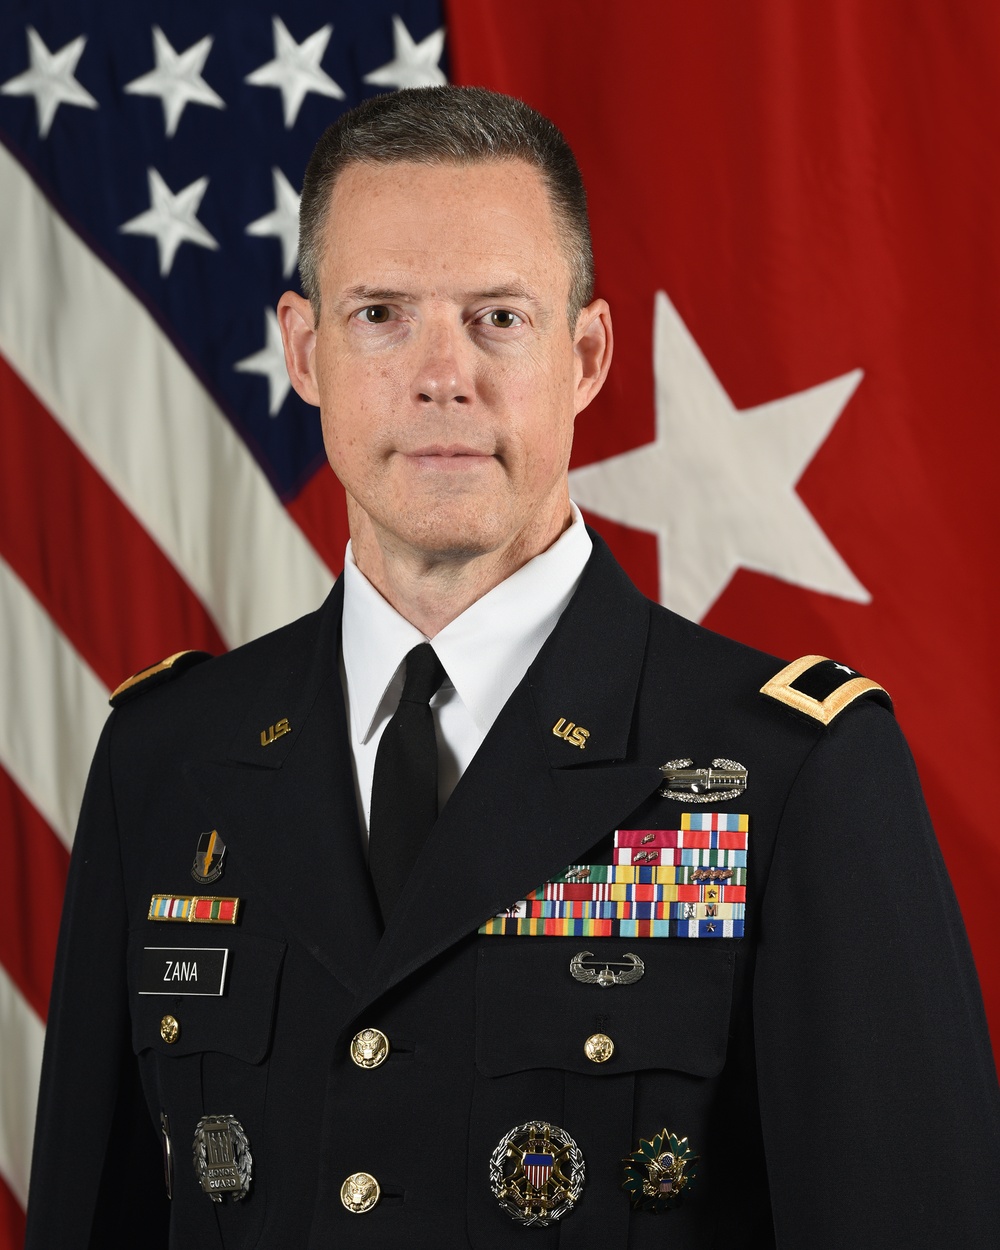 U.S. Army Brig. Gen. William L. Zana